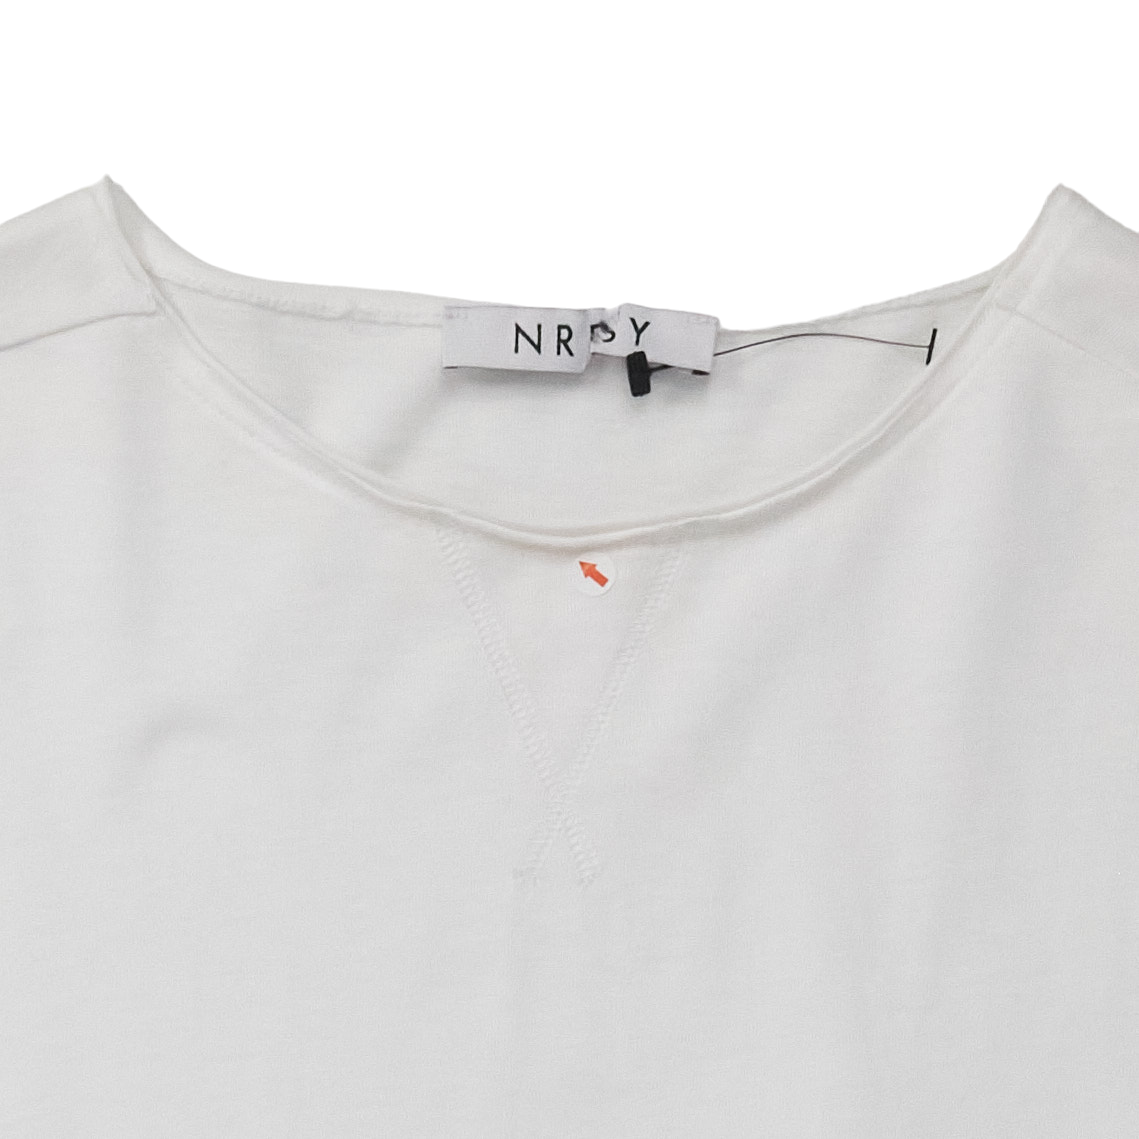 NRBY White Jersey Sweatshirt Style Top